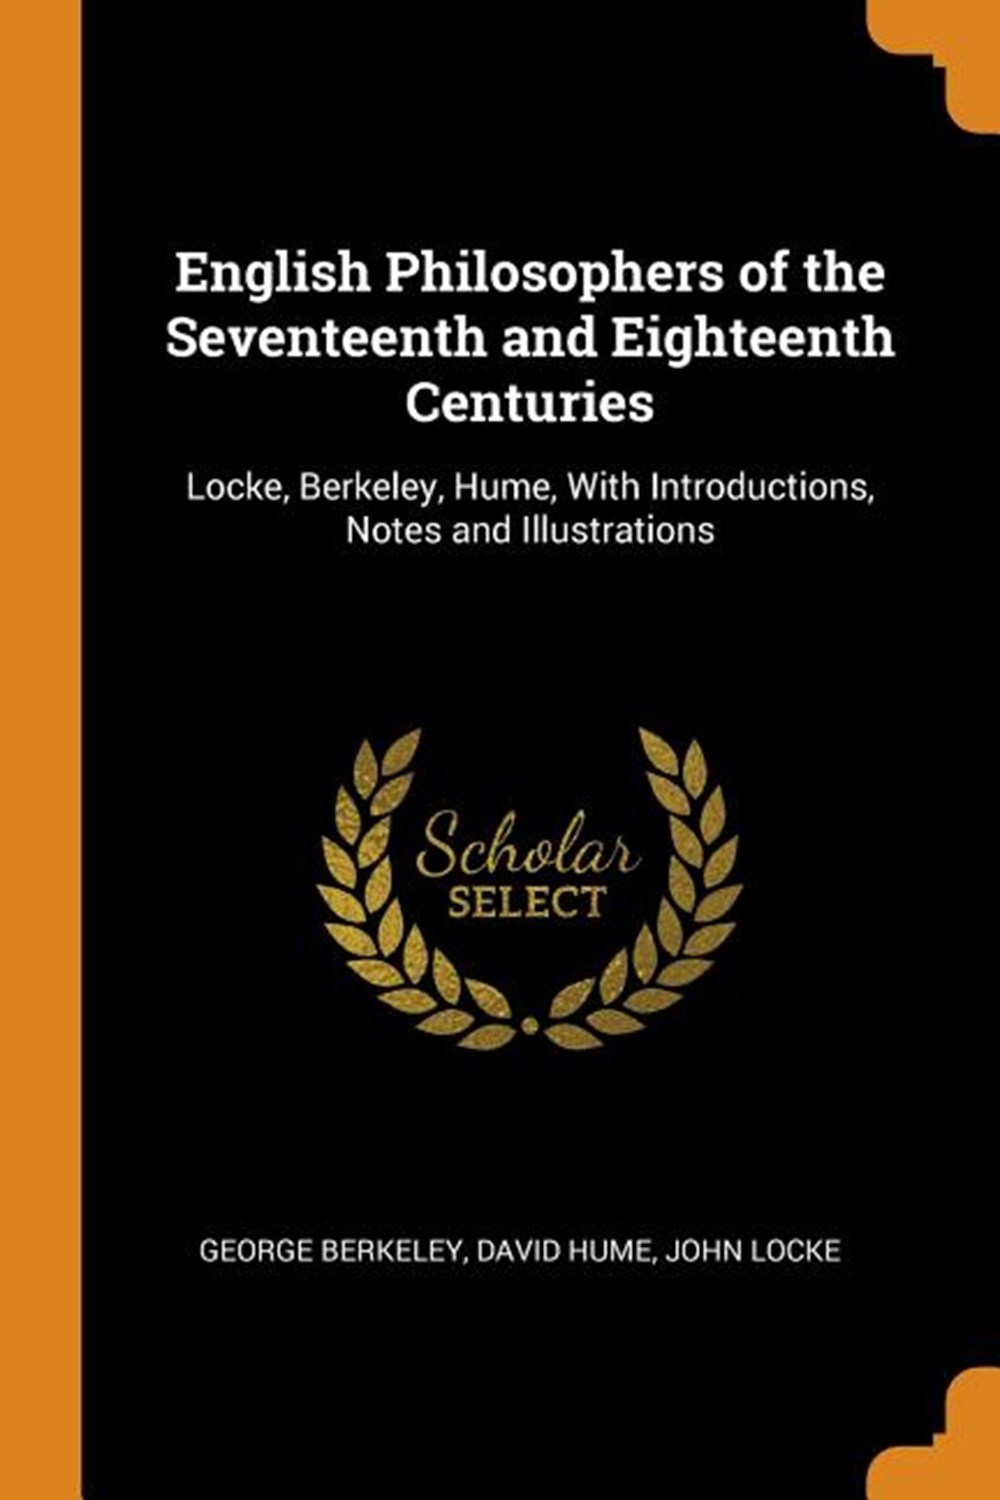 English Philosophers of the Seventeenth and Eighteenth Centuries: Locke, Berkeley, Hume, with Introd